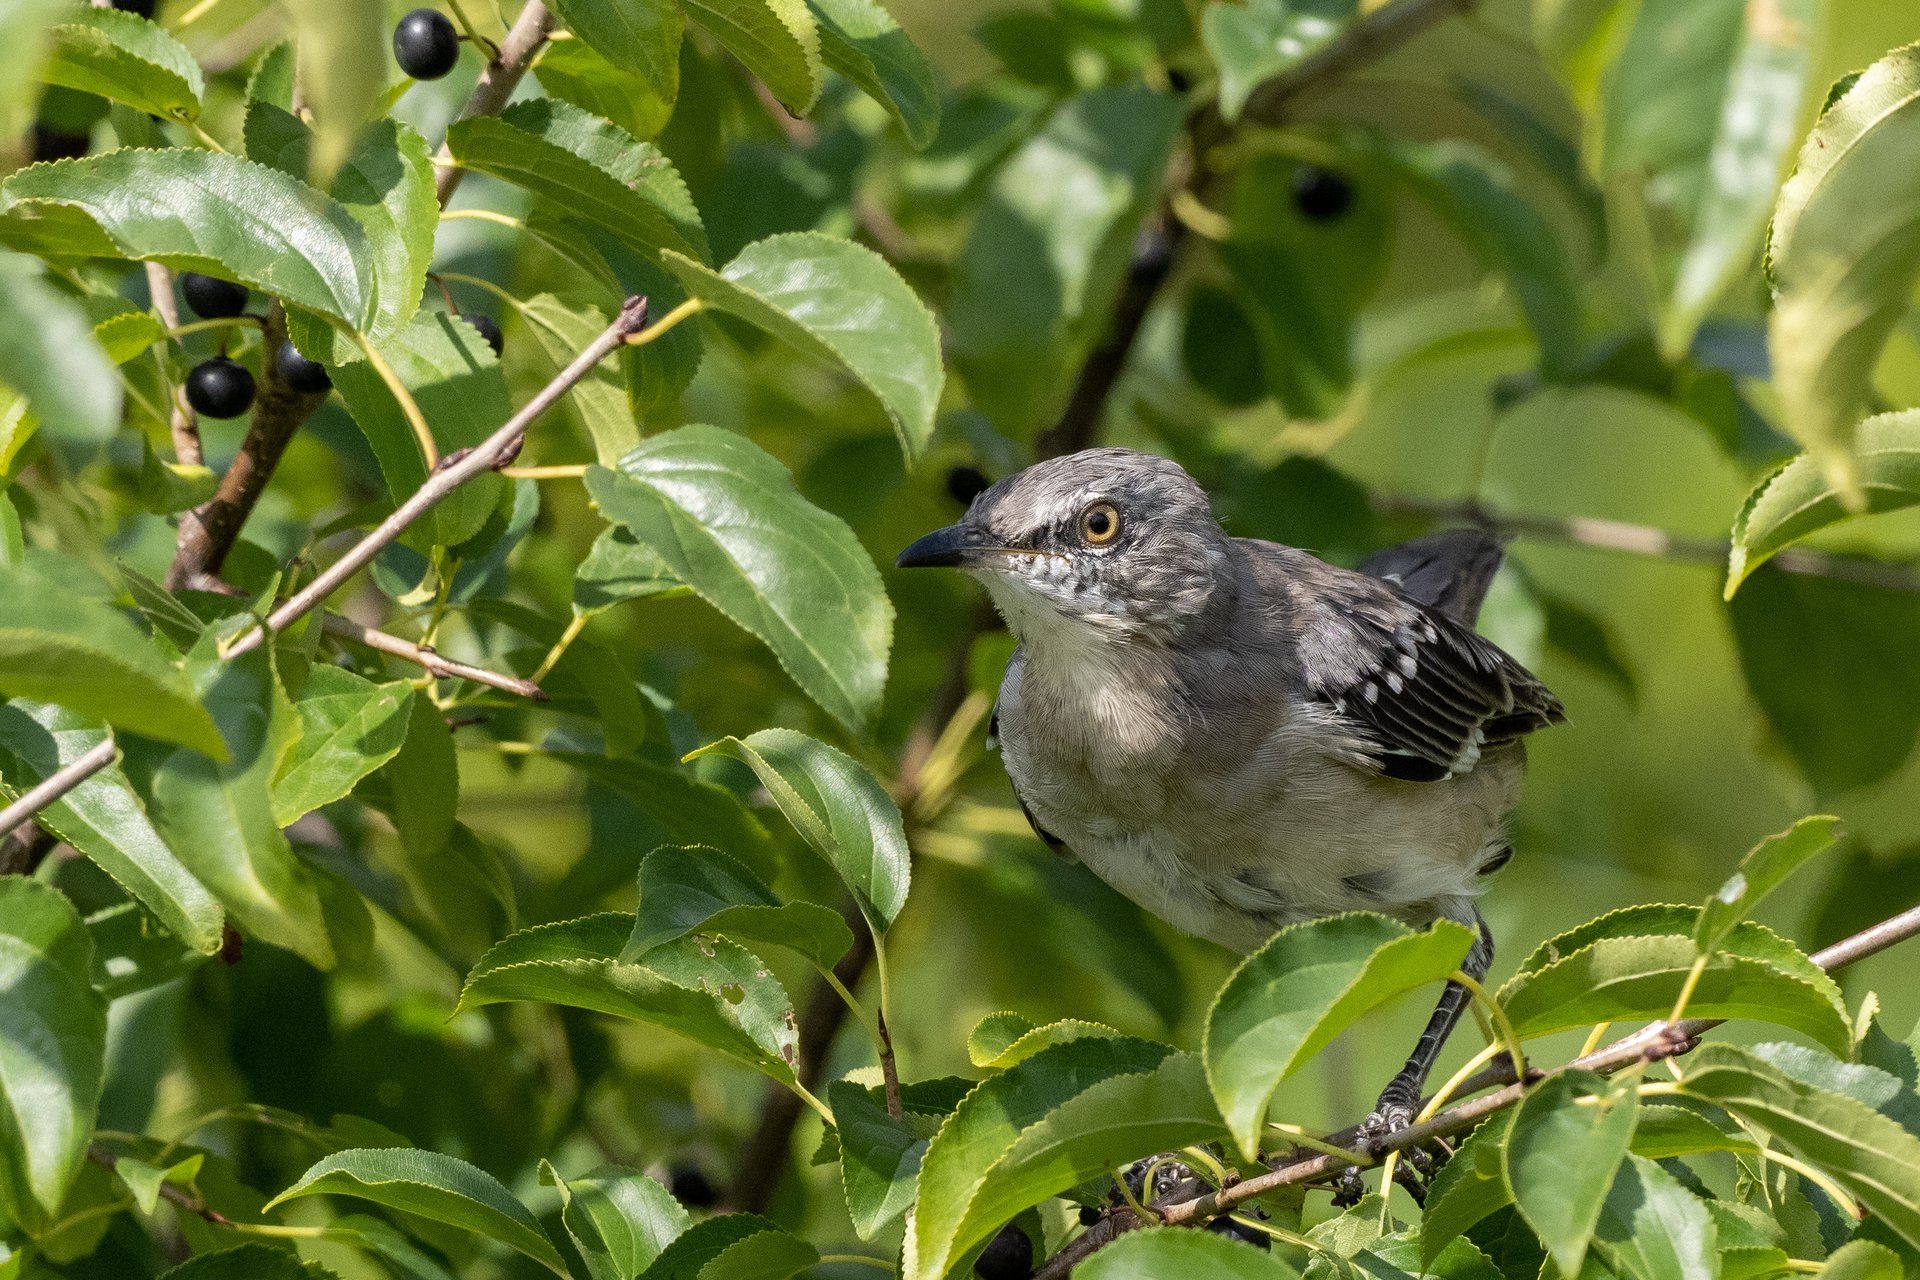 Northern Mockingbird nestled among leaves